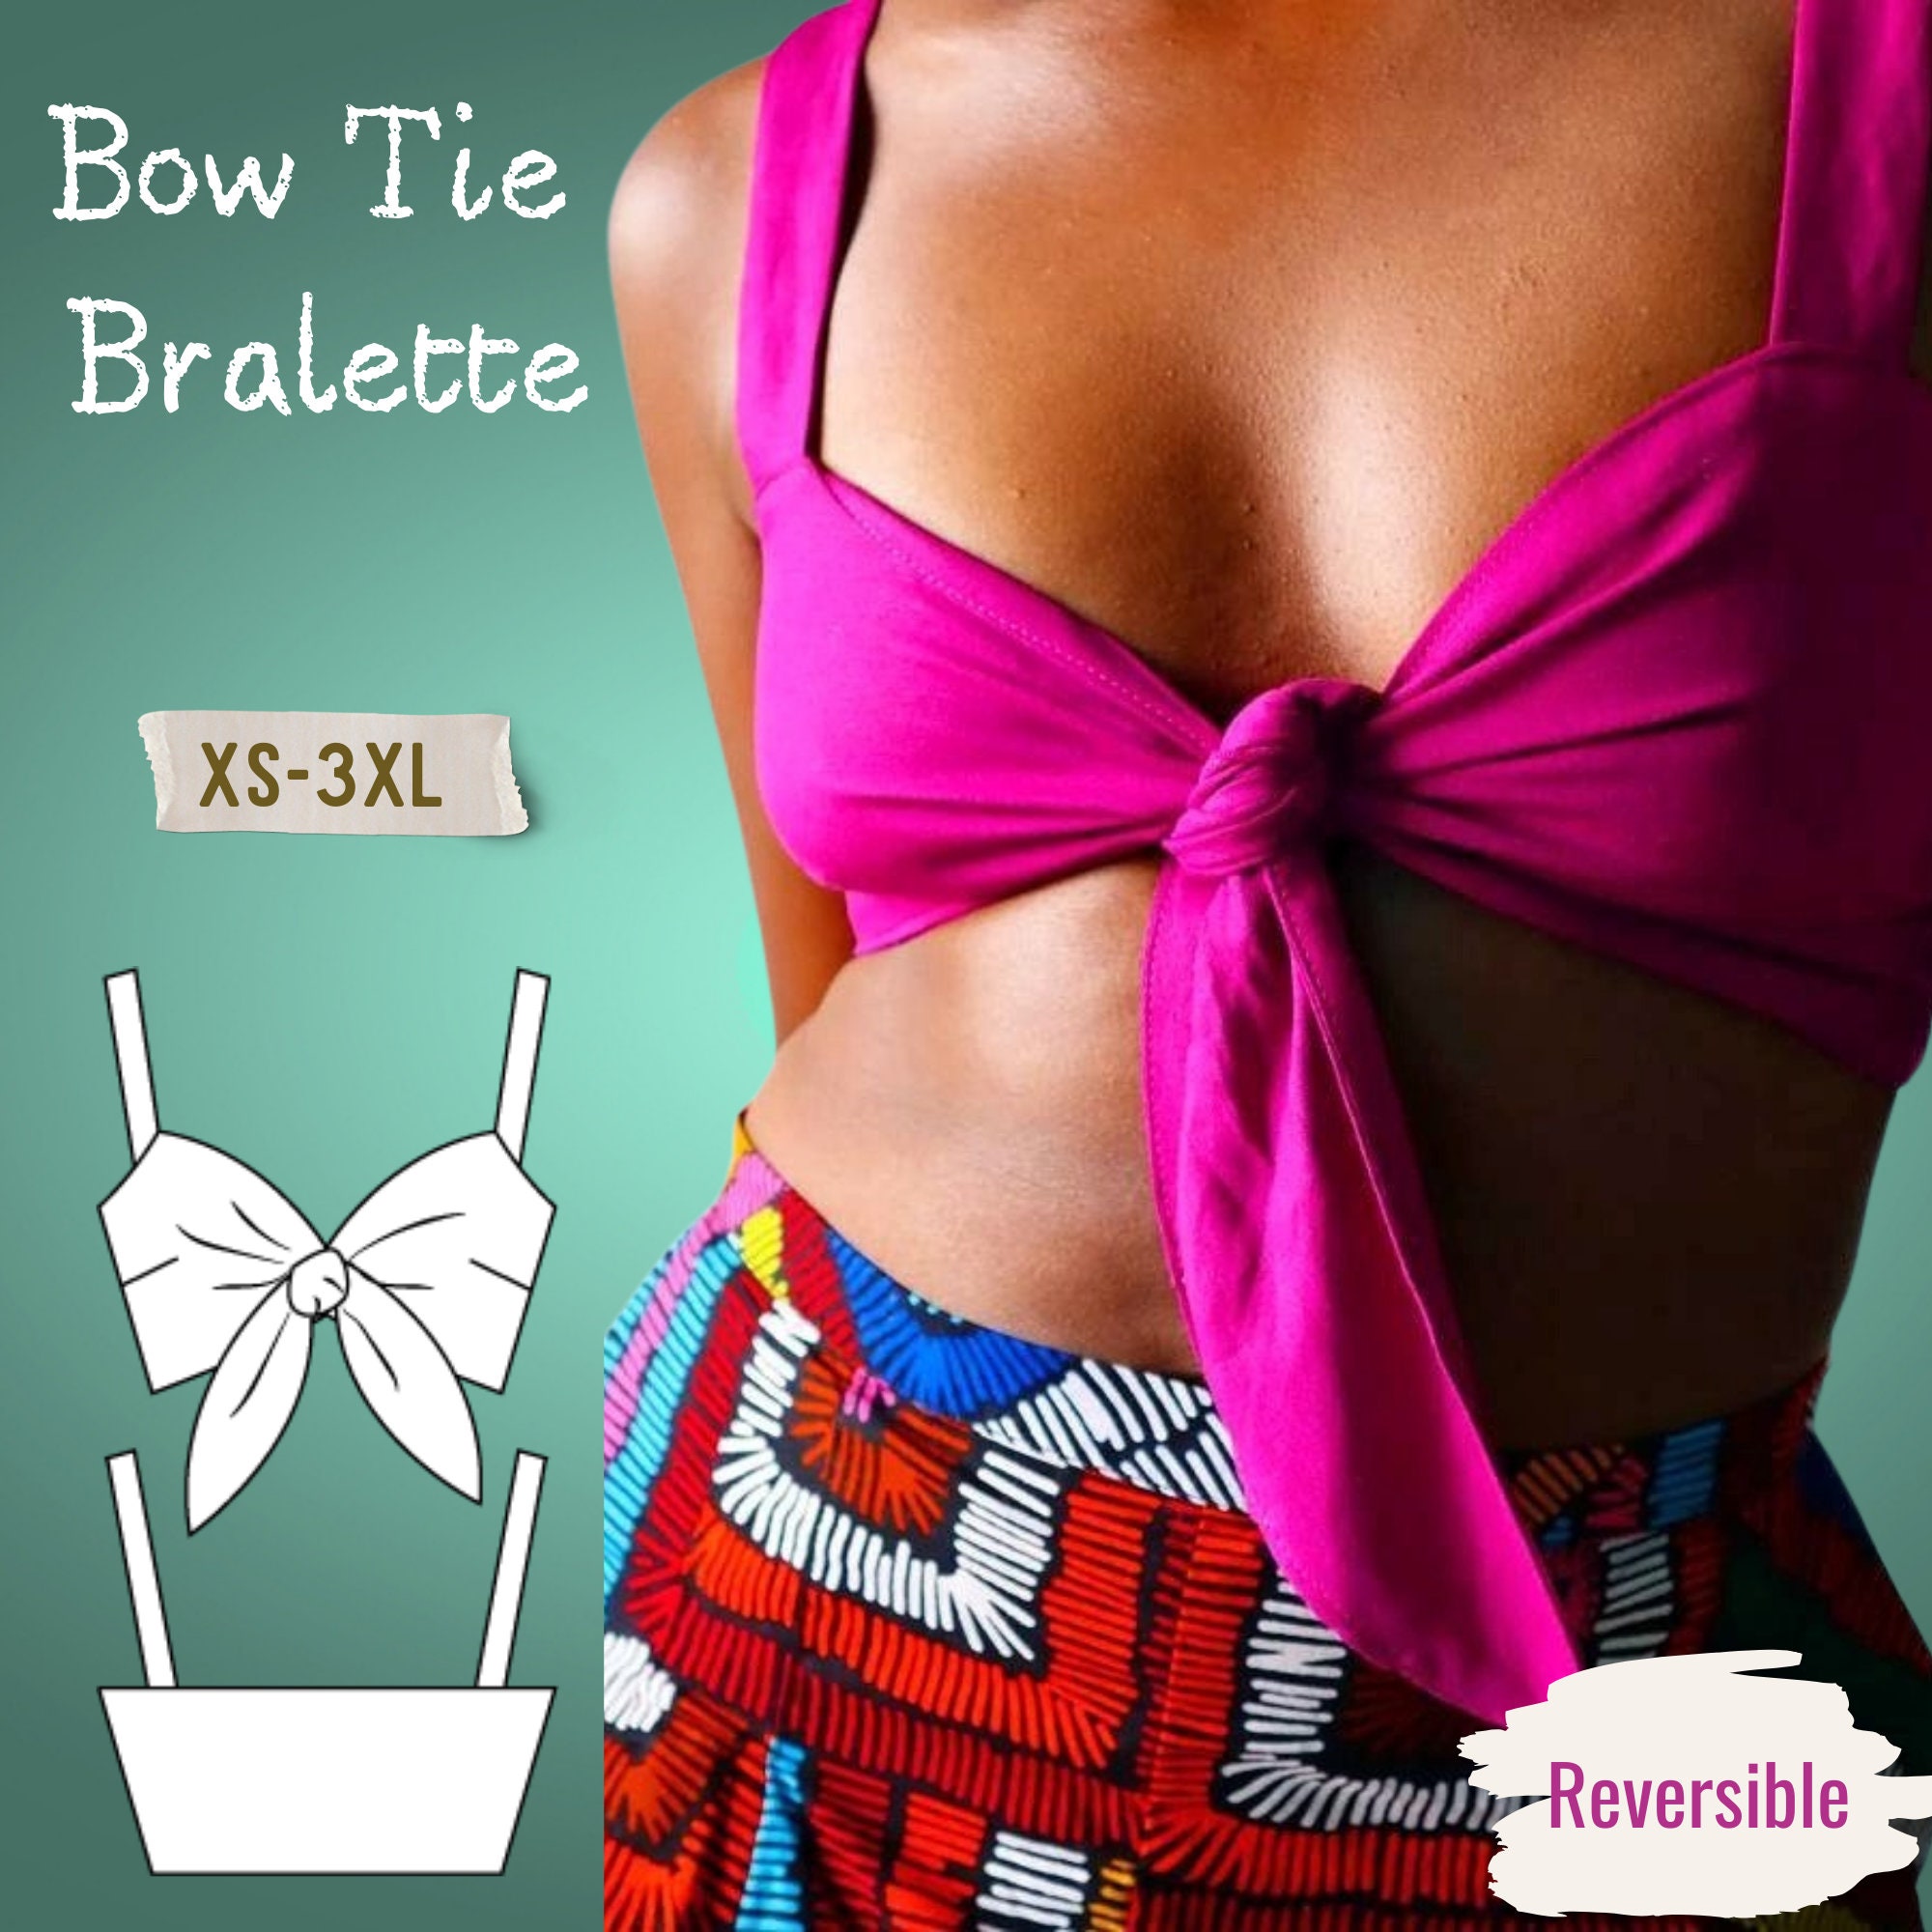 Delvine Bralette PDF sewing pattern: high neck bra for low stretch